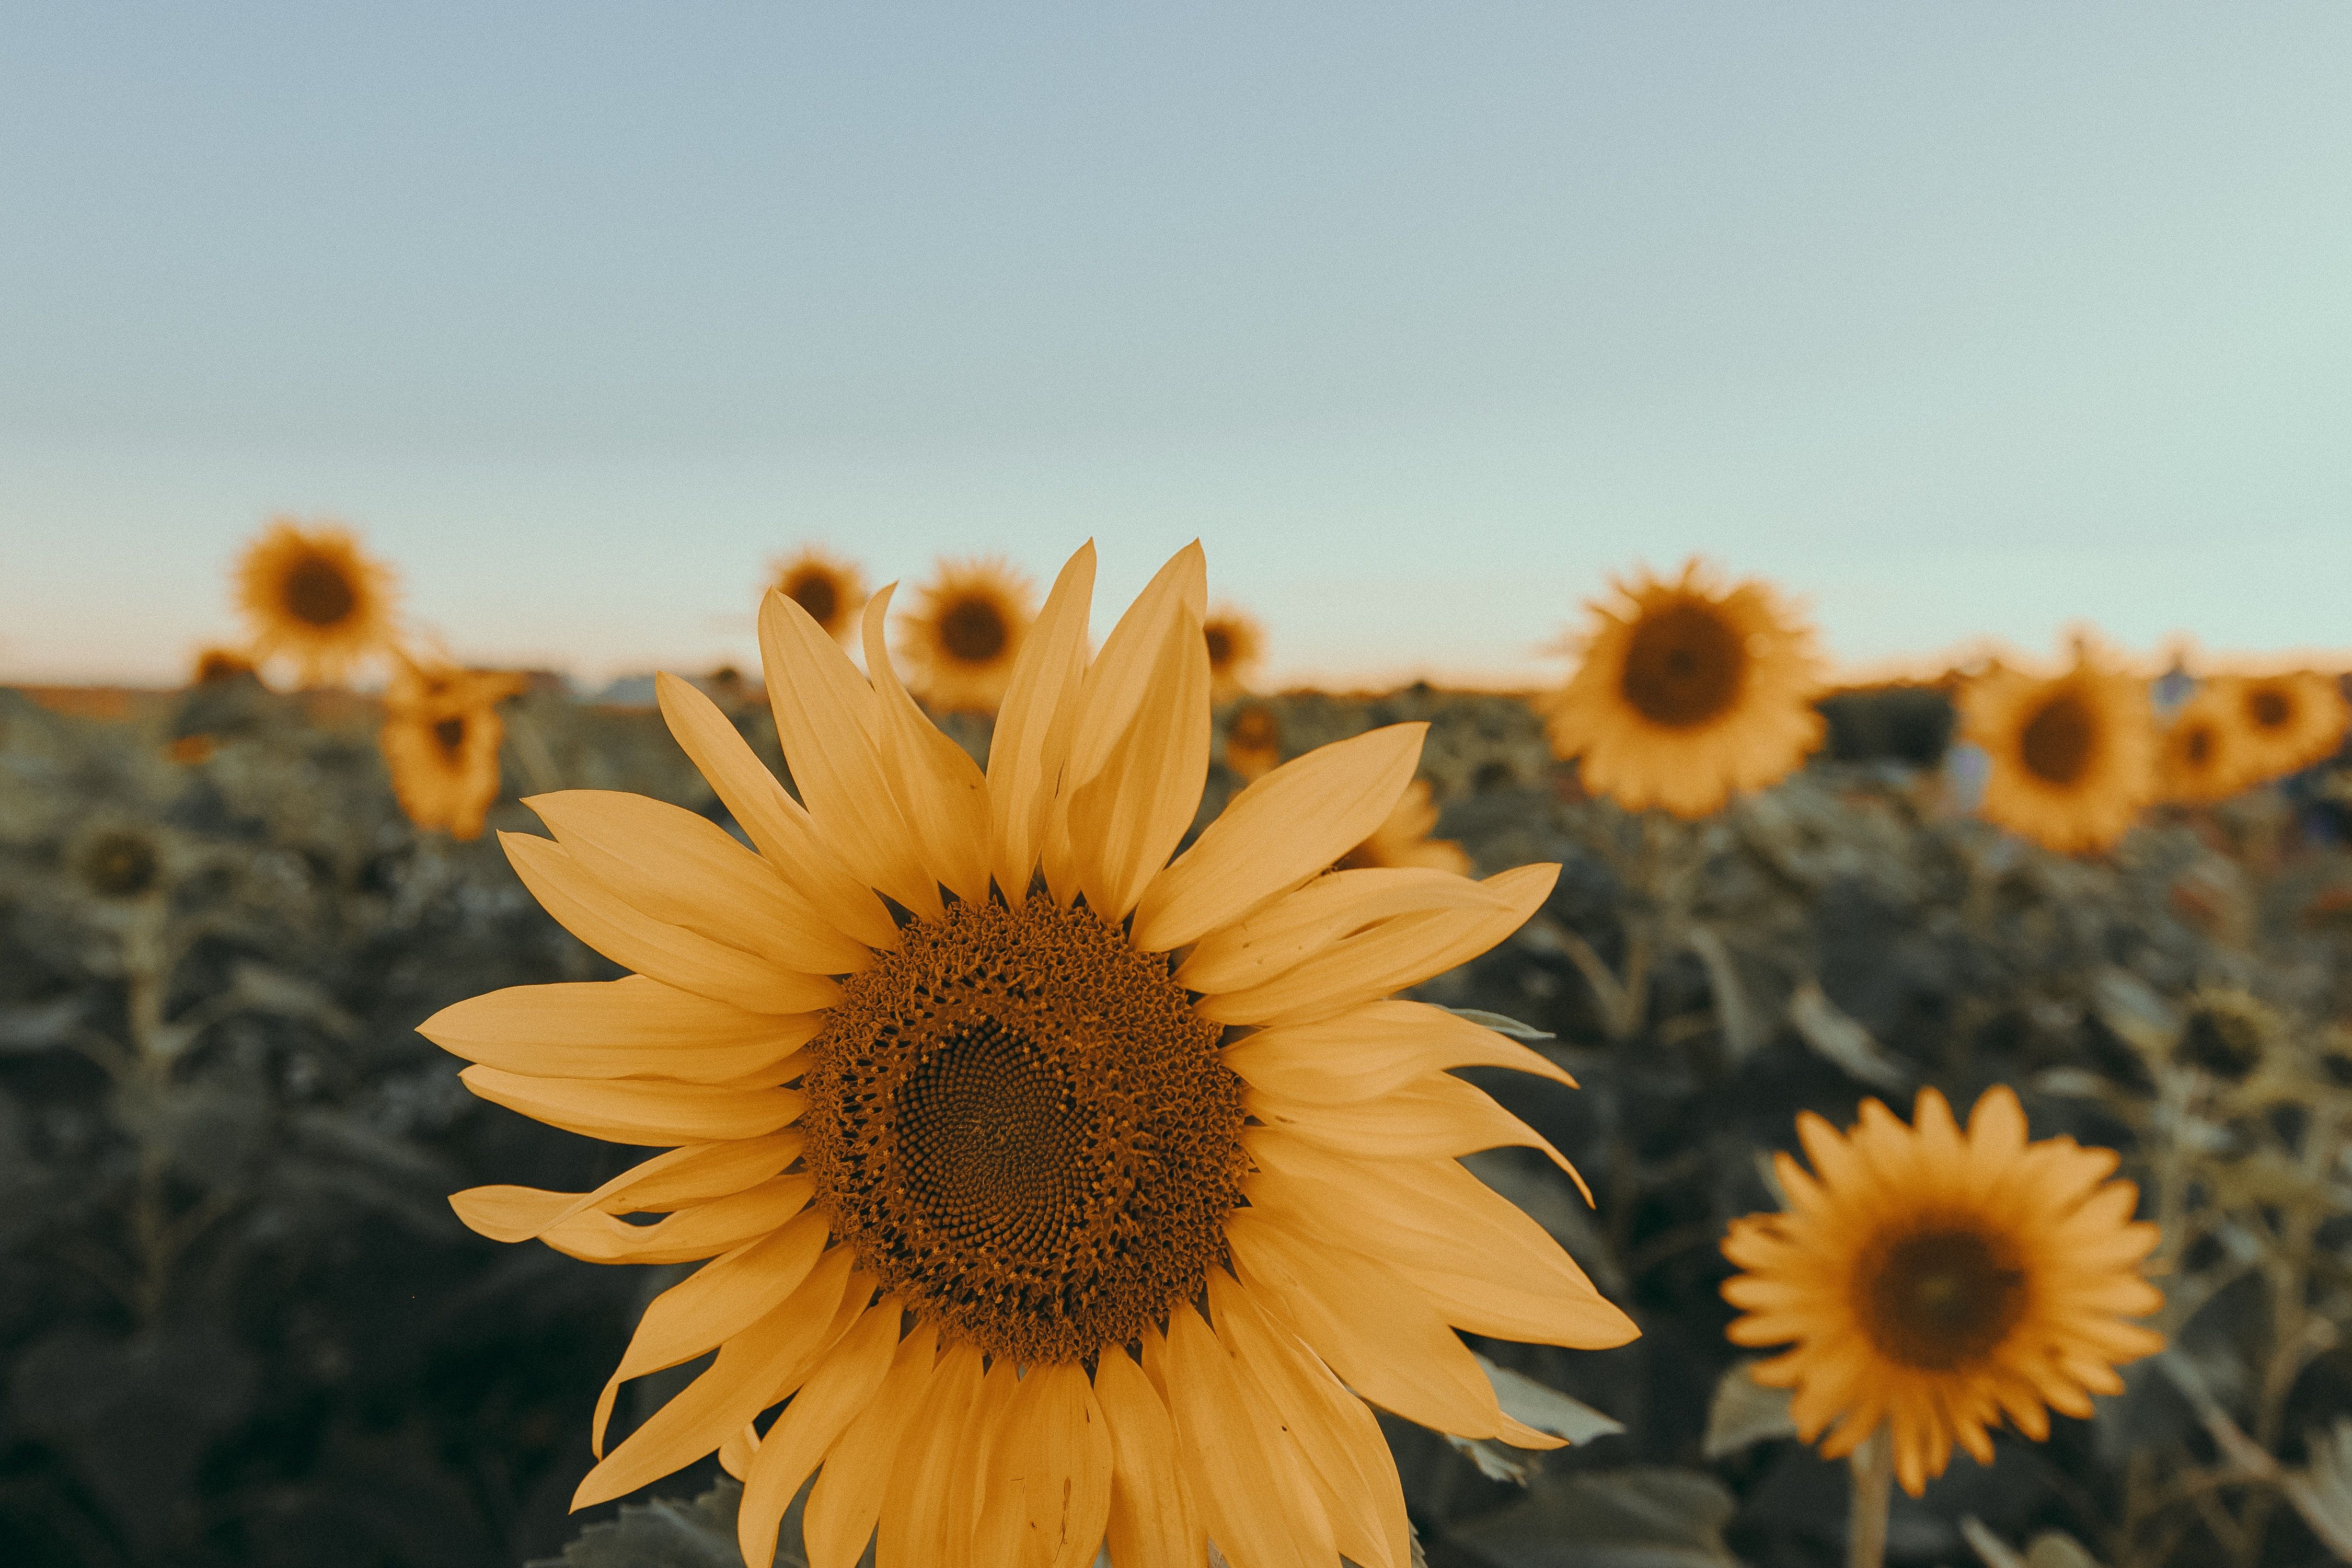 A sunflower in a field during a beautiful sunset. - Sunflower